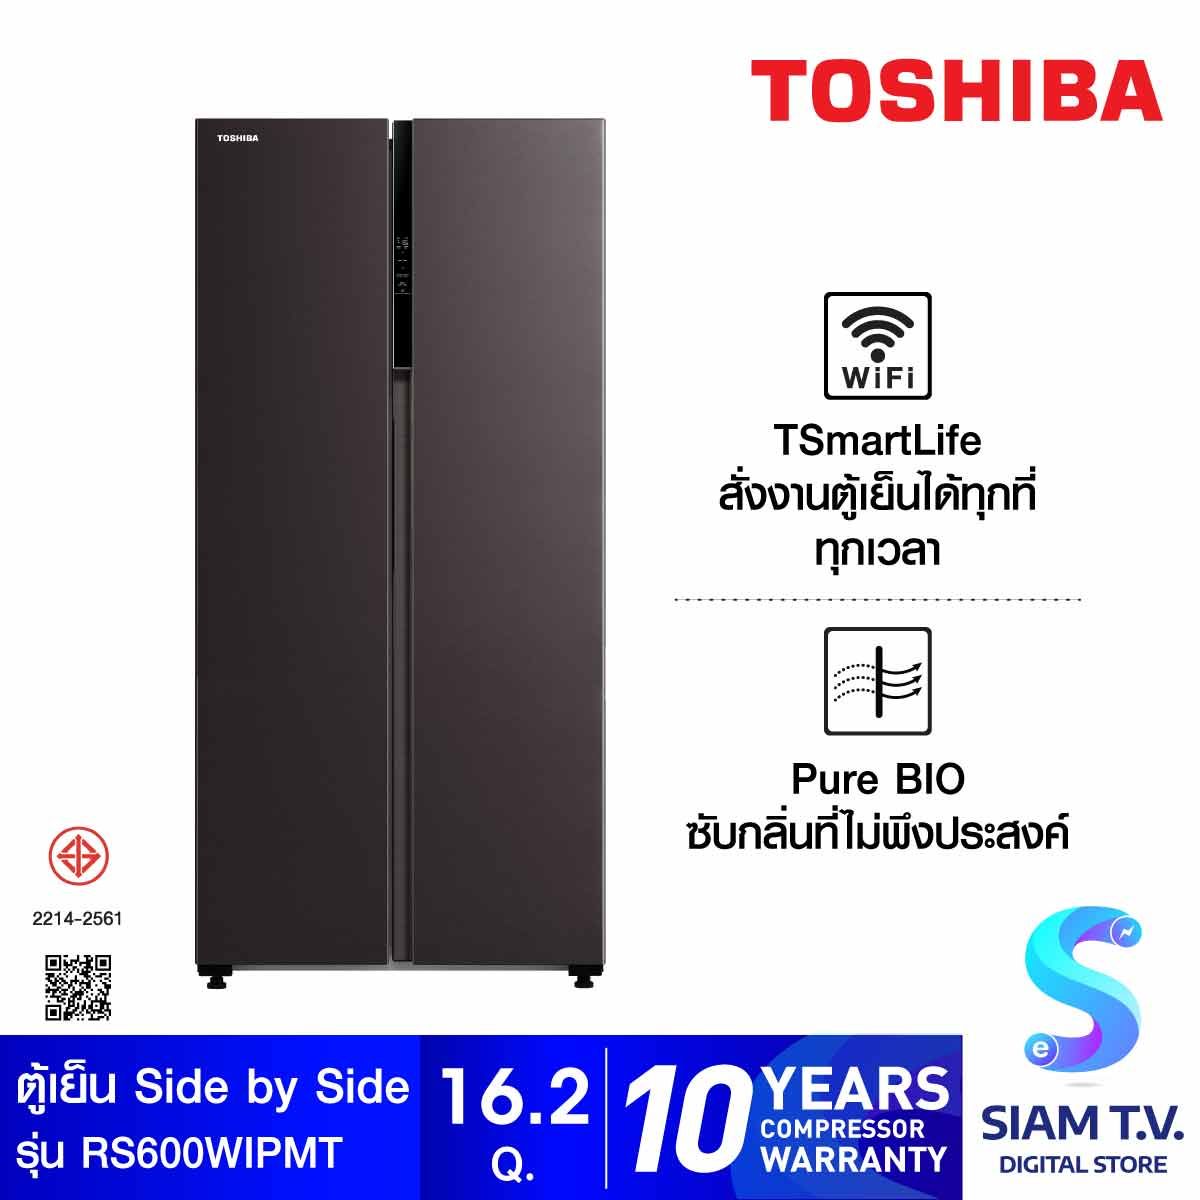 TOSHIBA ตู้เย็น Side by Side 16.2Q  TSmartLife  สี SATIN GREY รุ่น GR-RS600WI-PMT(37)